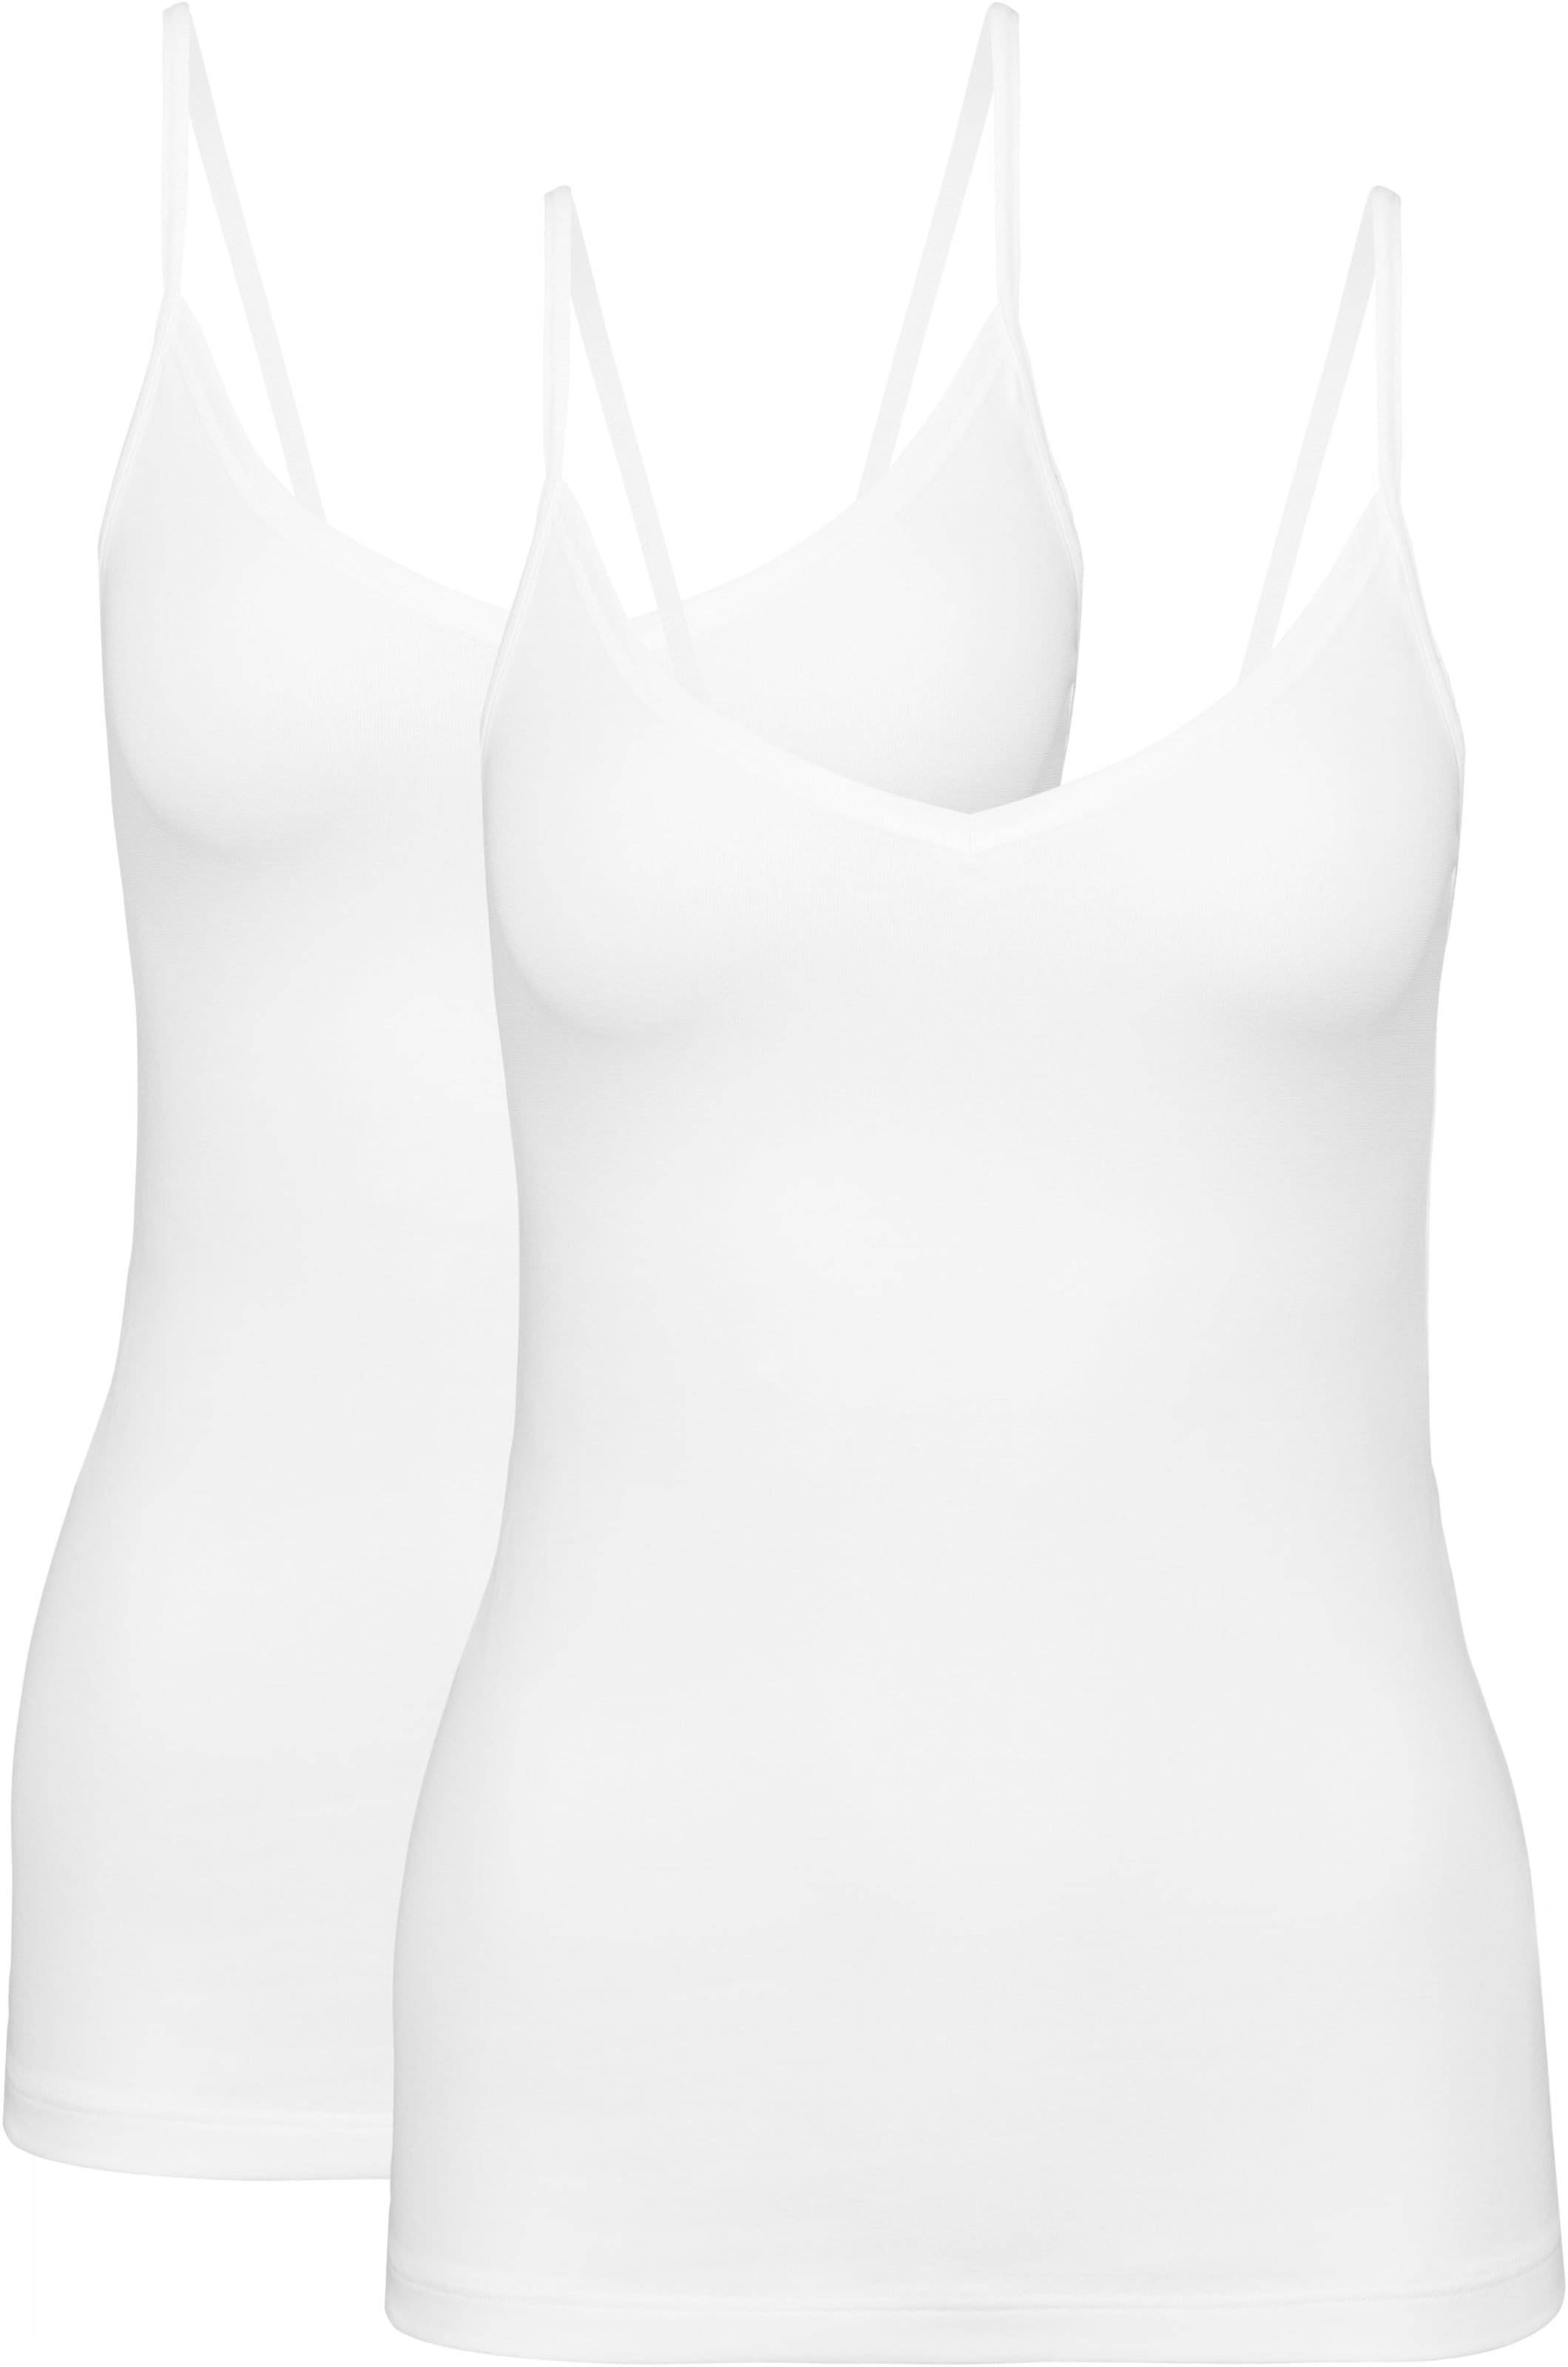 CALIDA Unterhemd »Benefit Women«, (2er Pack), aus Baumwolle